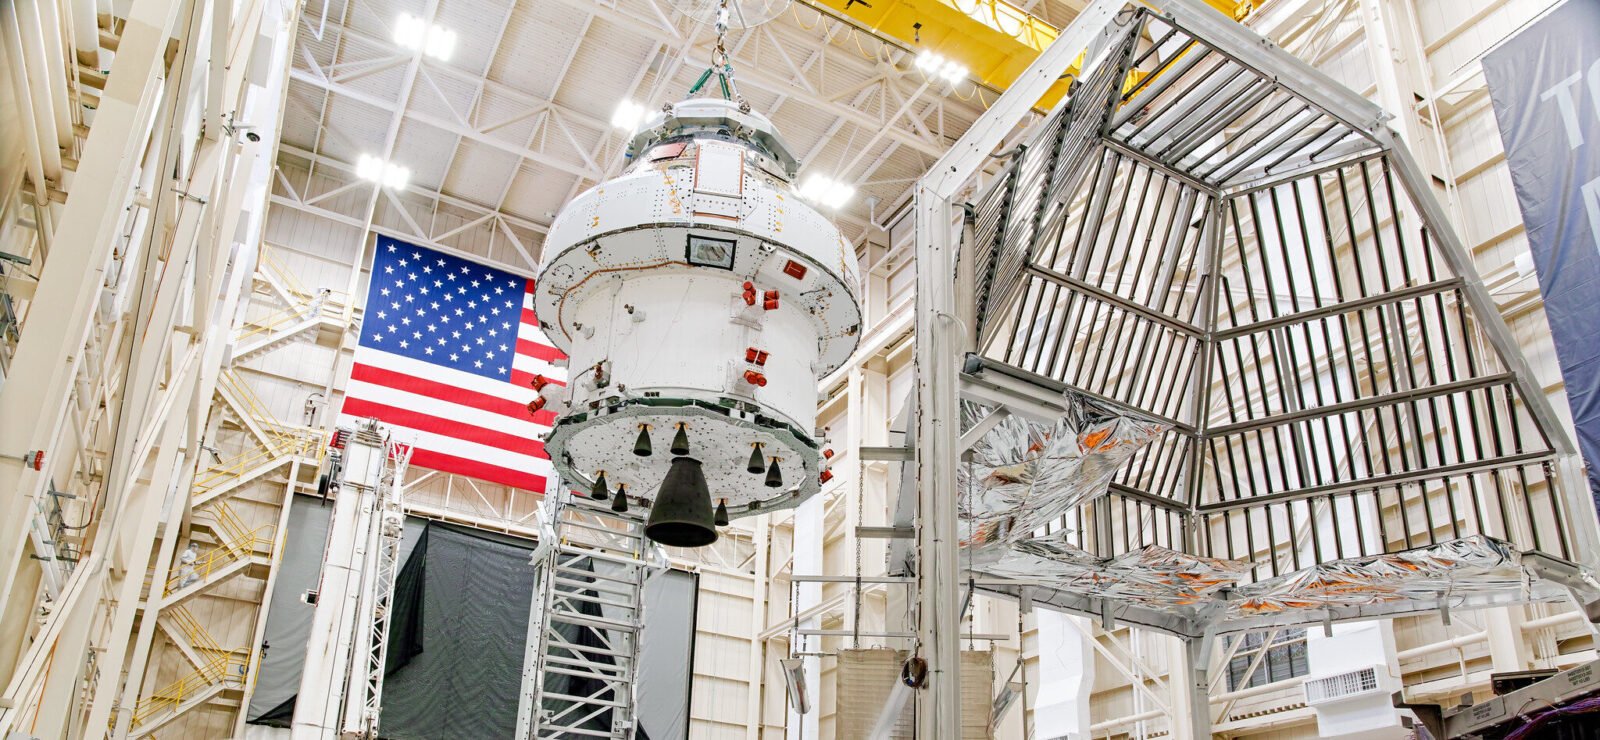 Engineers prepare the Artemis space capsule for thermal testing at NASA's Plum Brook Station